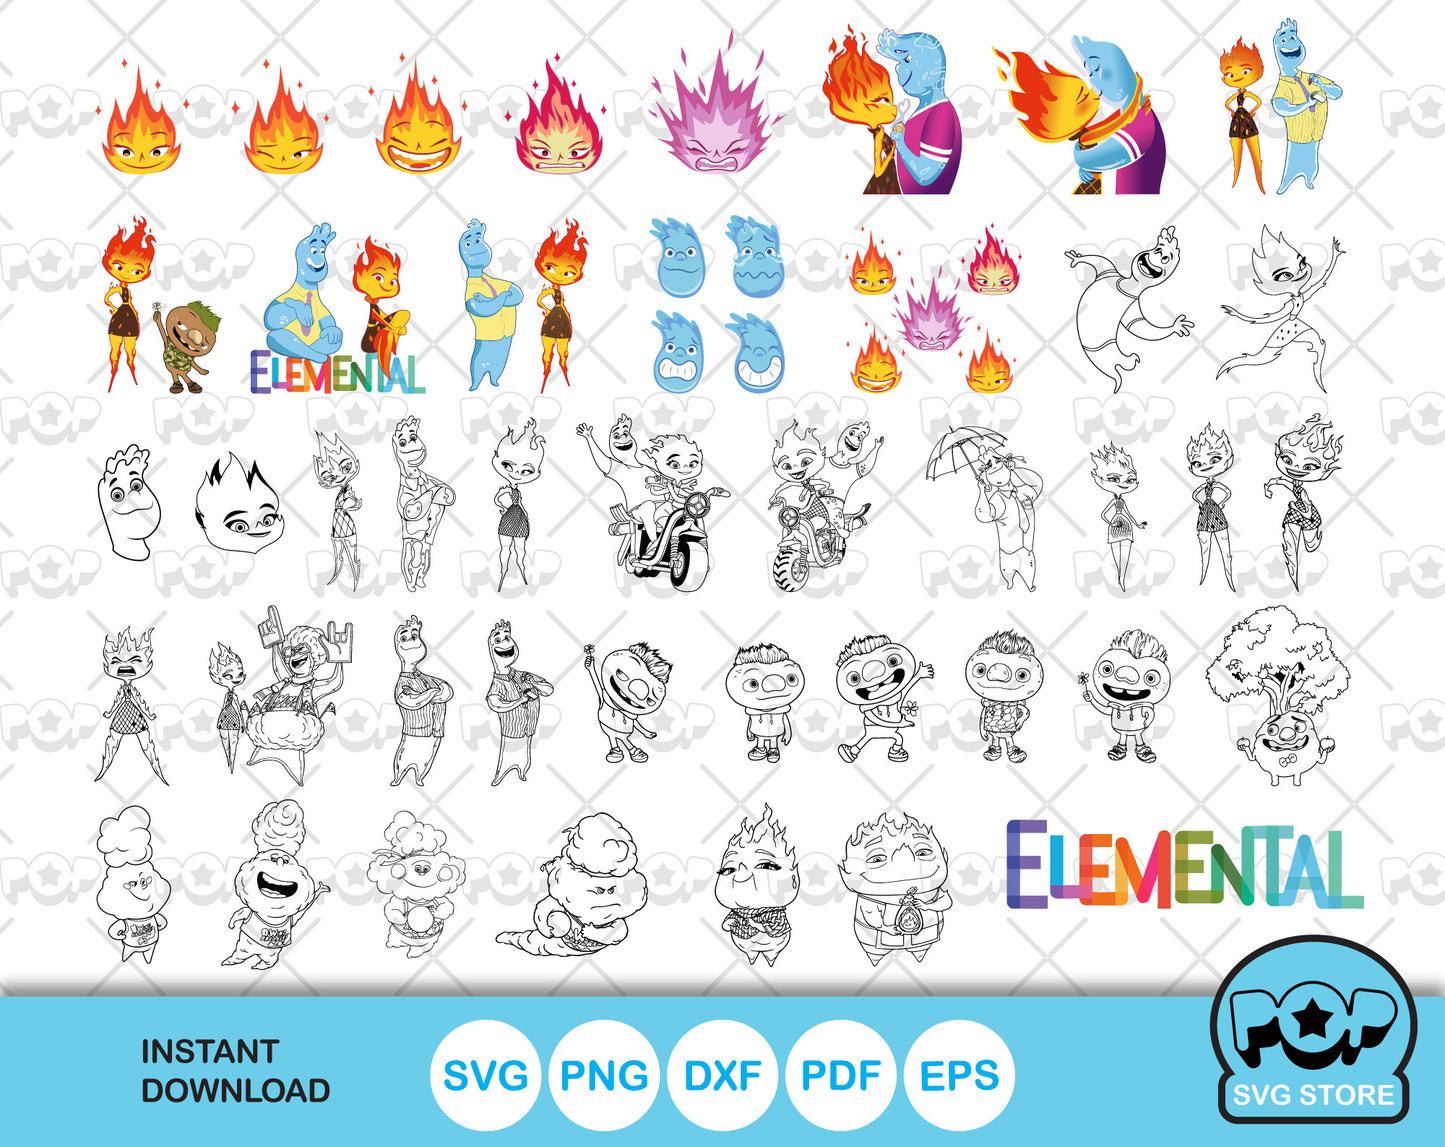 Disney Elemental clipart set, Elemental svg cut files for Cricut / Silhouette, Elemental png, dxf